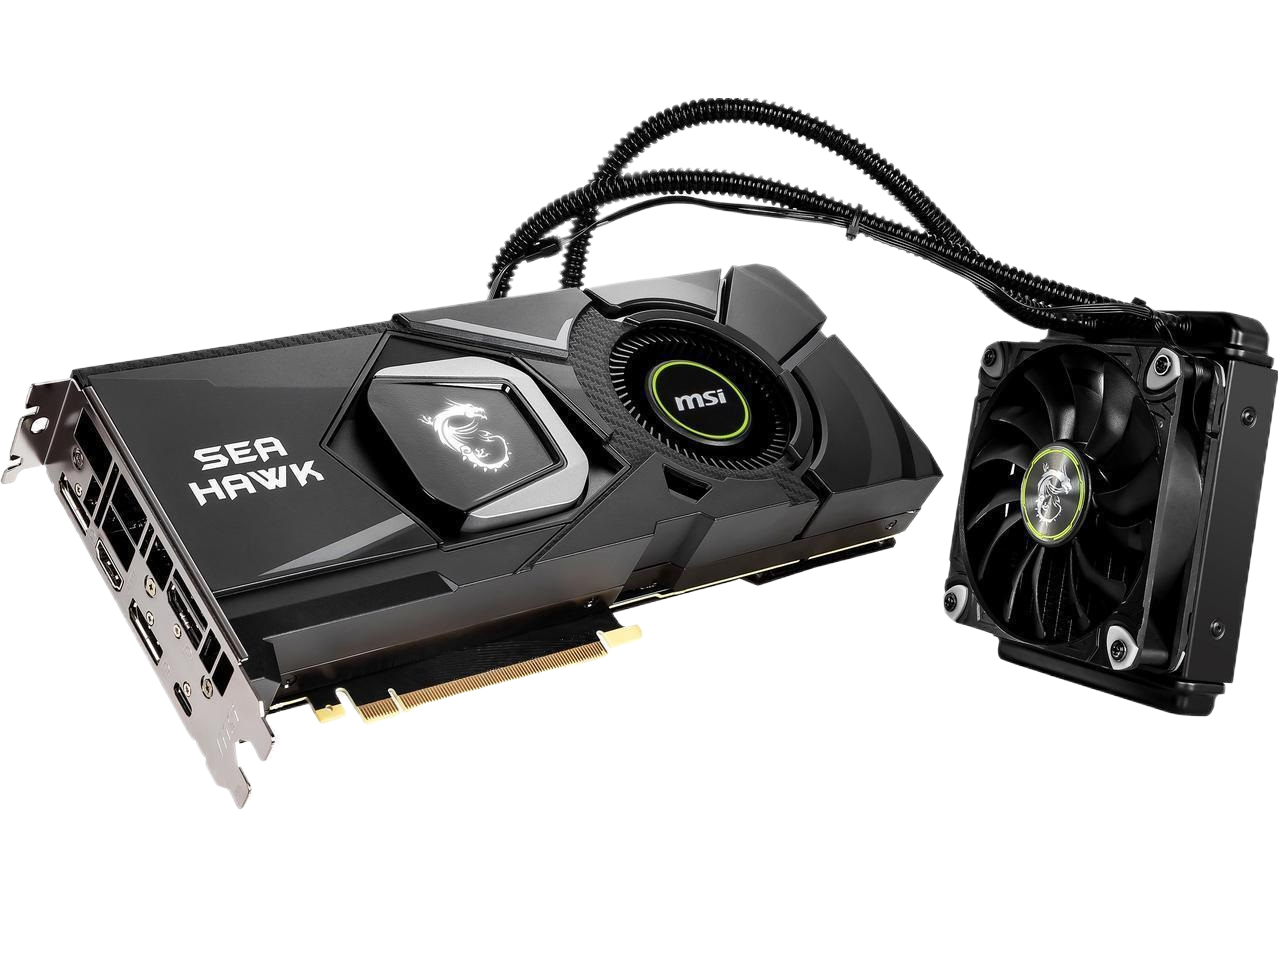 MSI GeForce RTX 2080 Ti SEA Hawk X Gaming 11GB GDRR6 352-bit HDMI/DP/USB Ray Tracing Turing Architecture Liquid Cooling Graphics Card